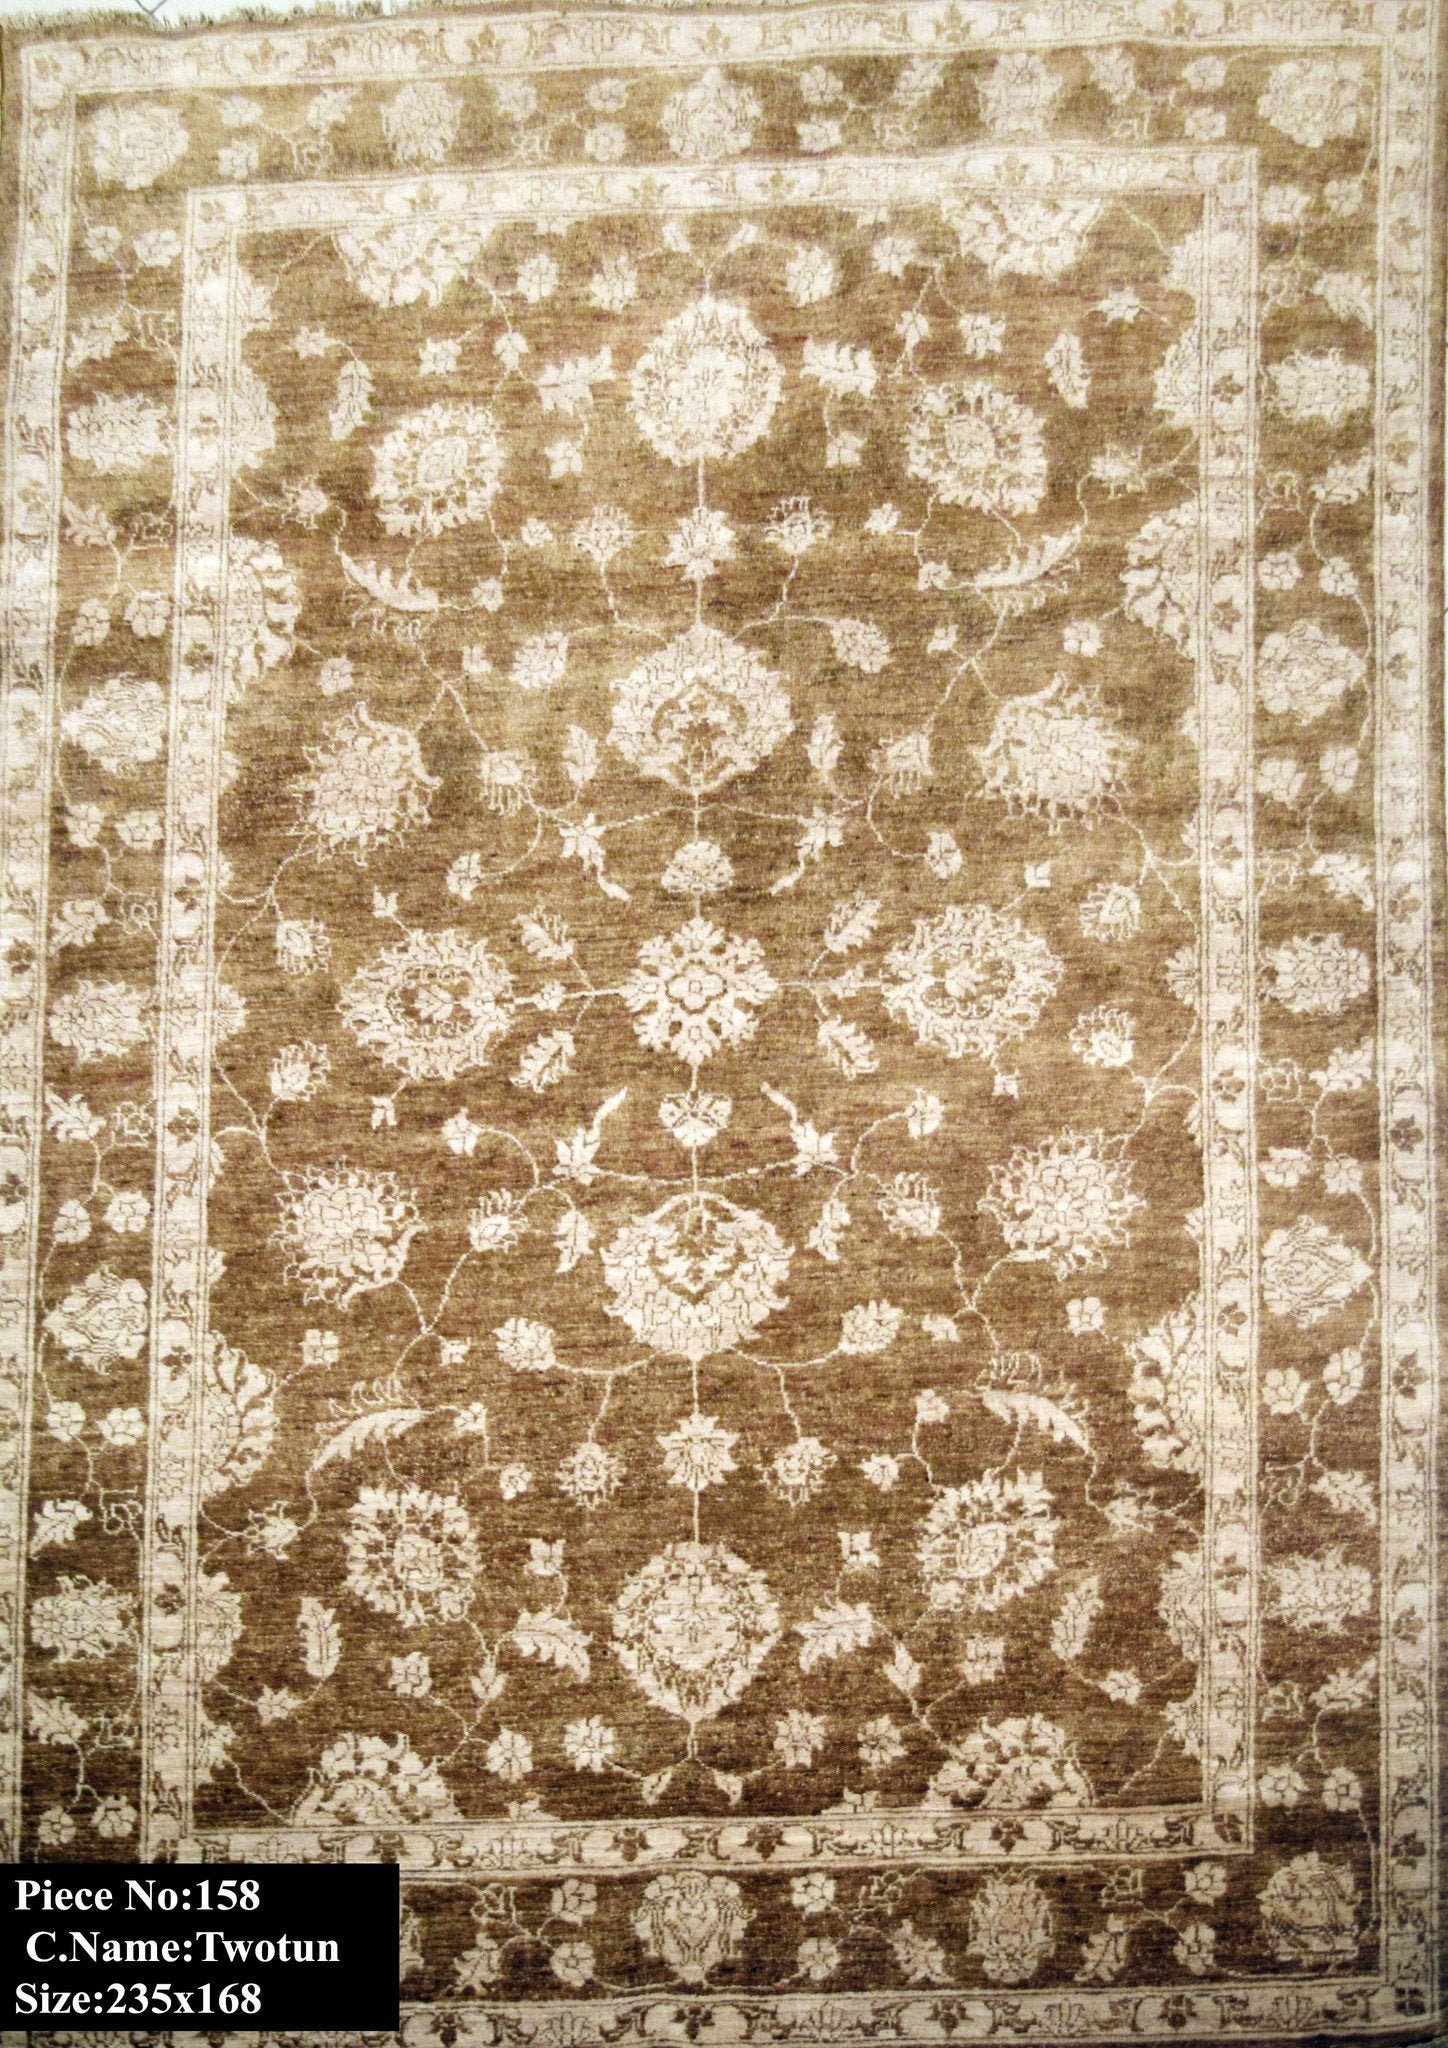 Chobi TwoTone 226x172 - Omid Carpets